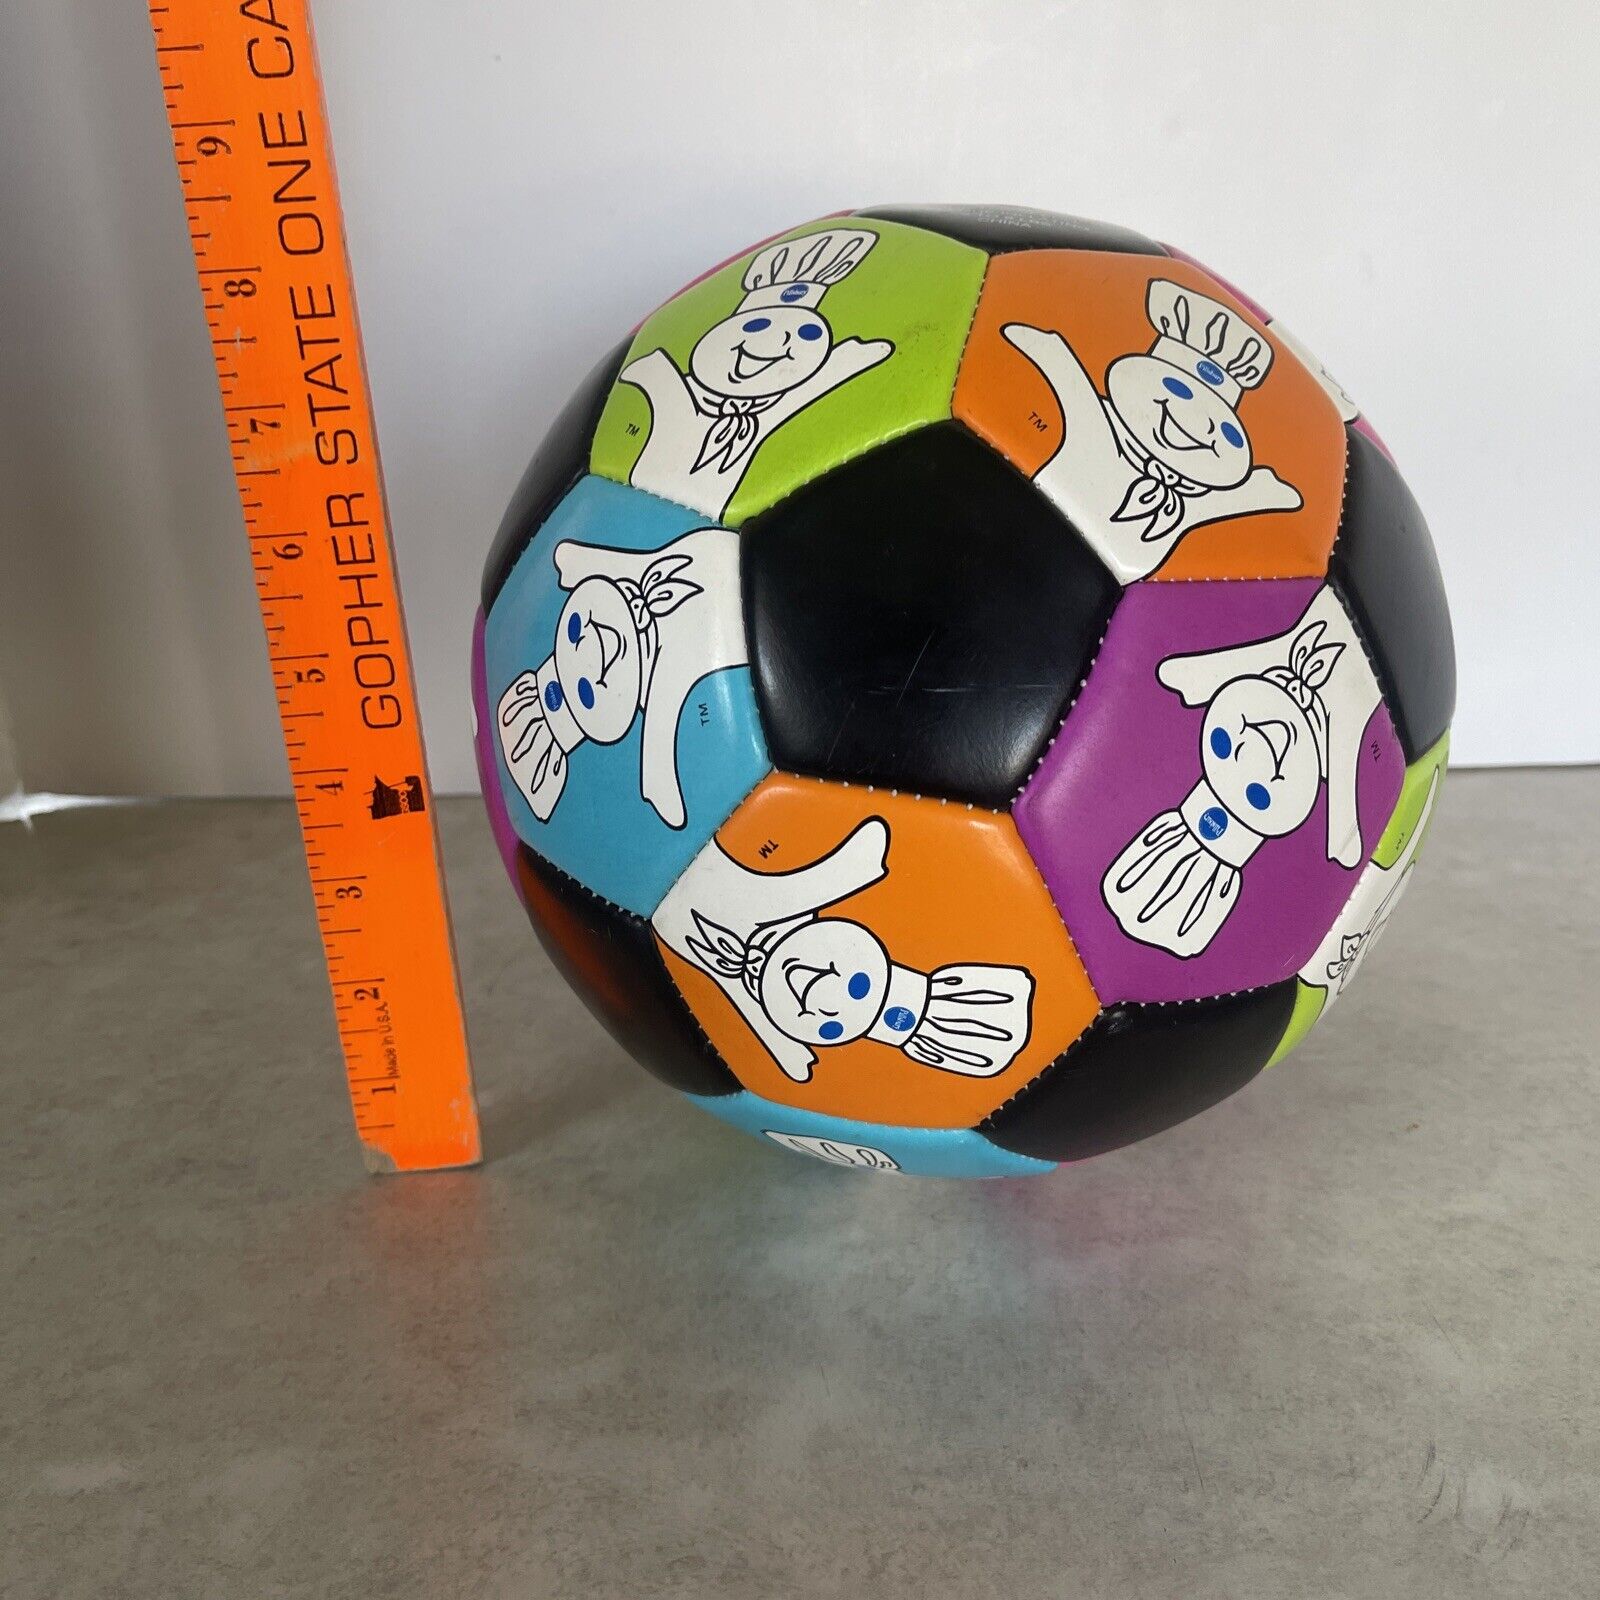 Pillsbury Doughboy Rawlings Soccer Ball 1998 VINTAGE Colorful